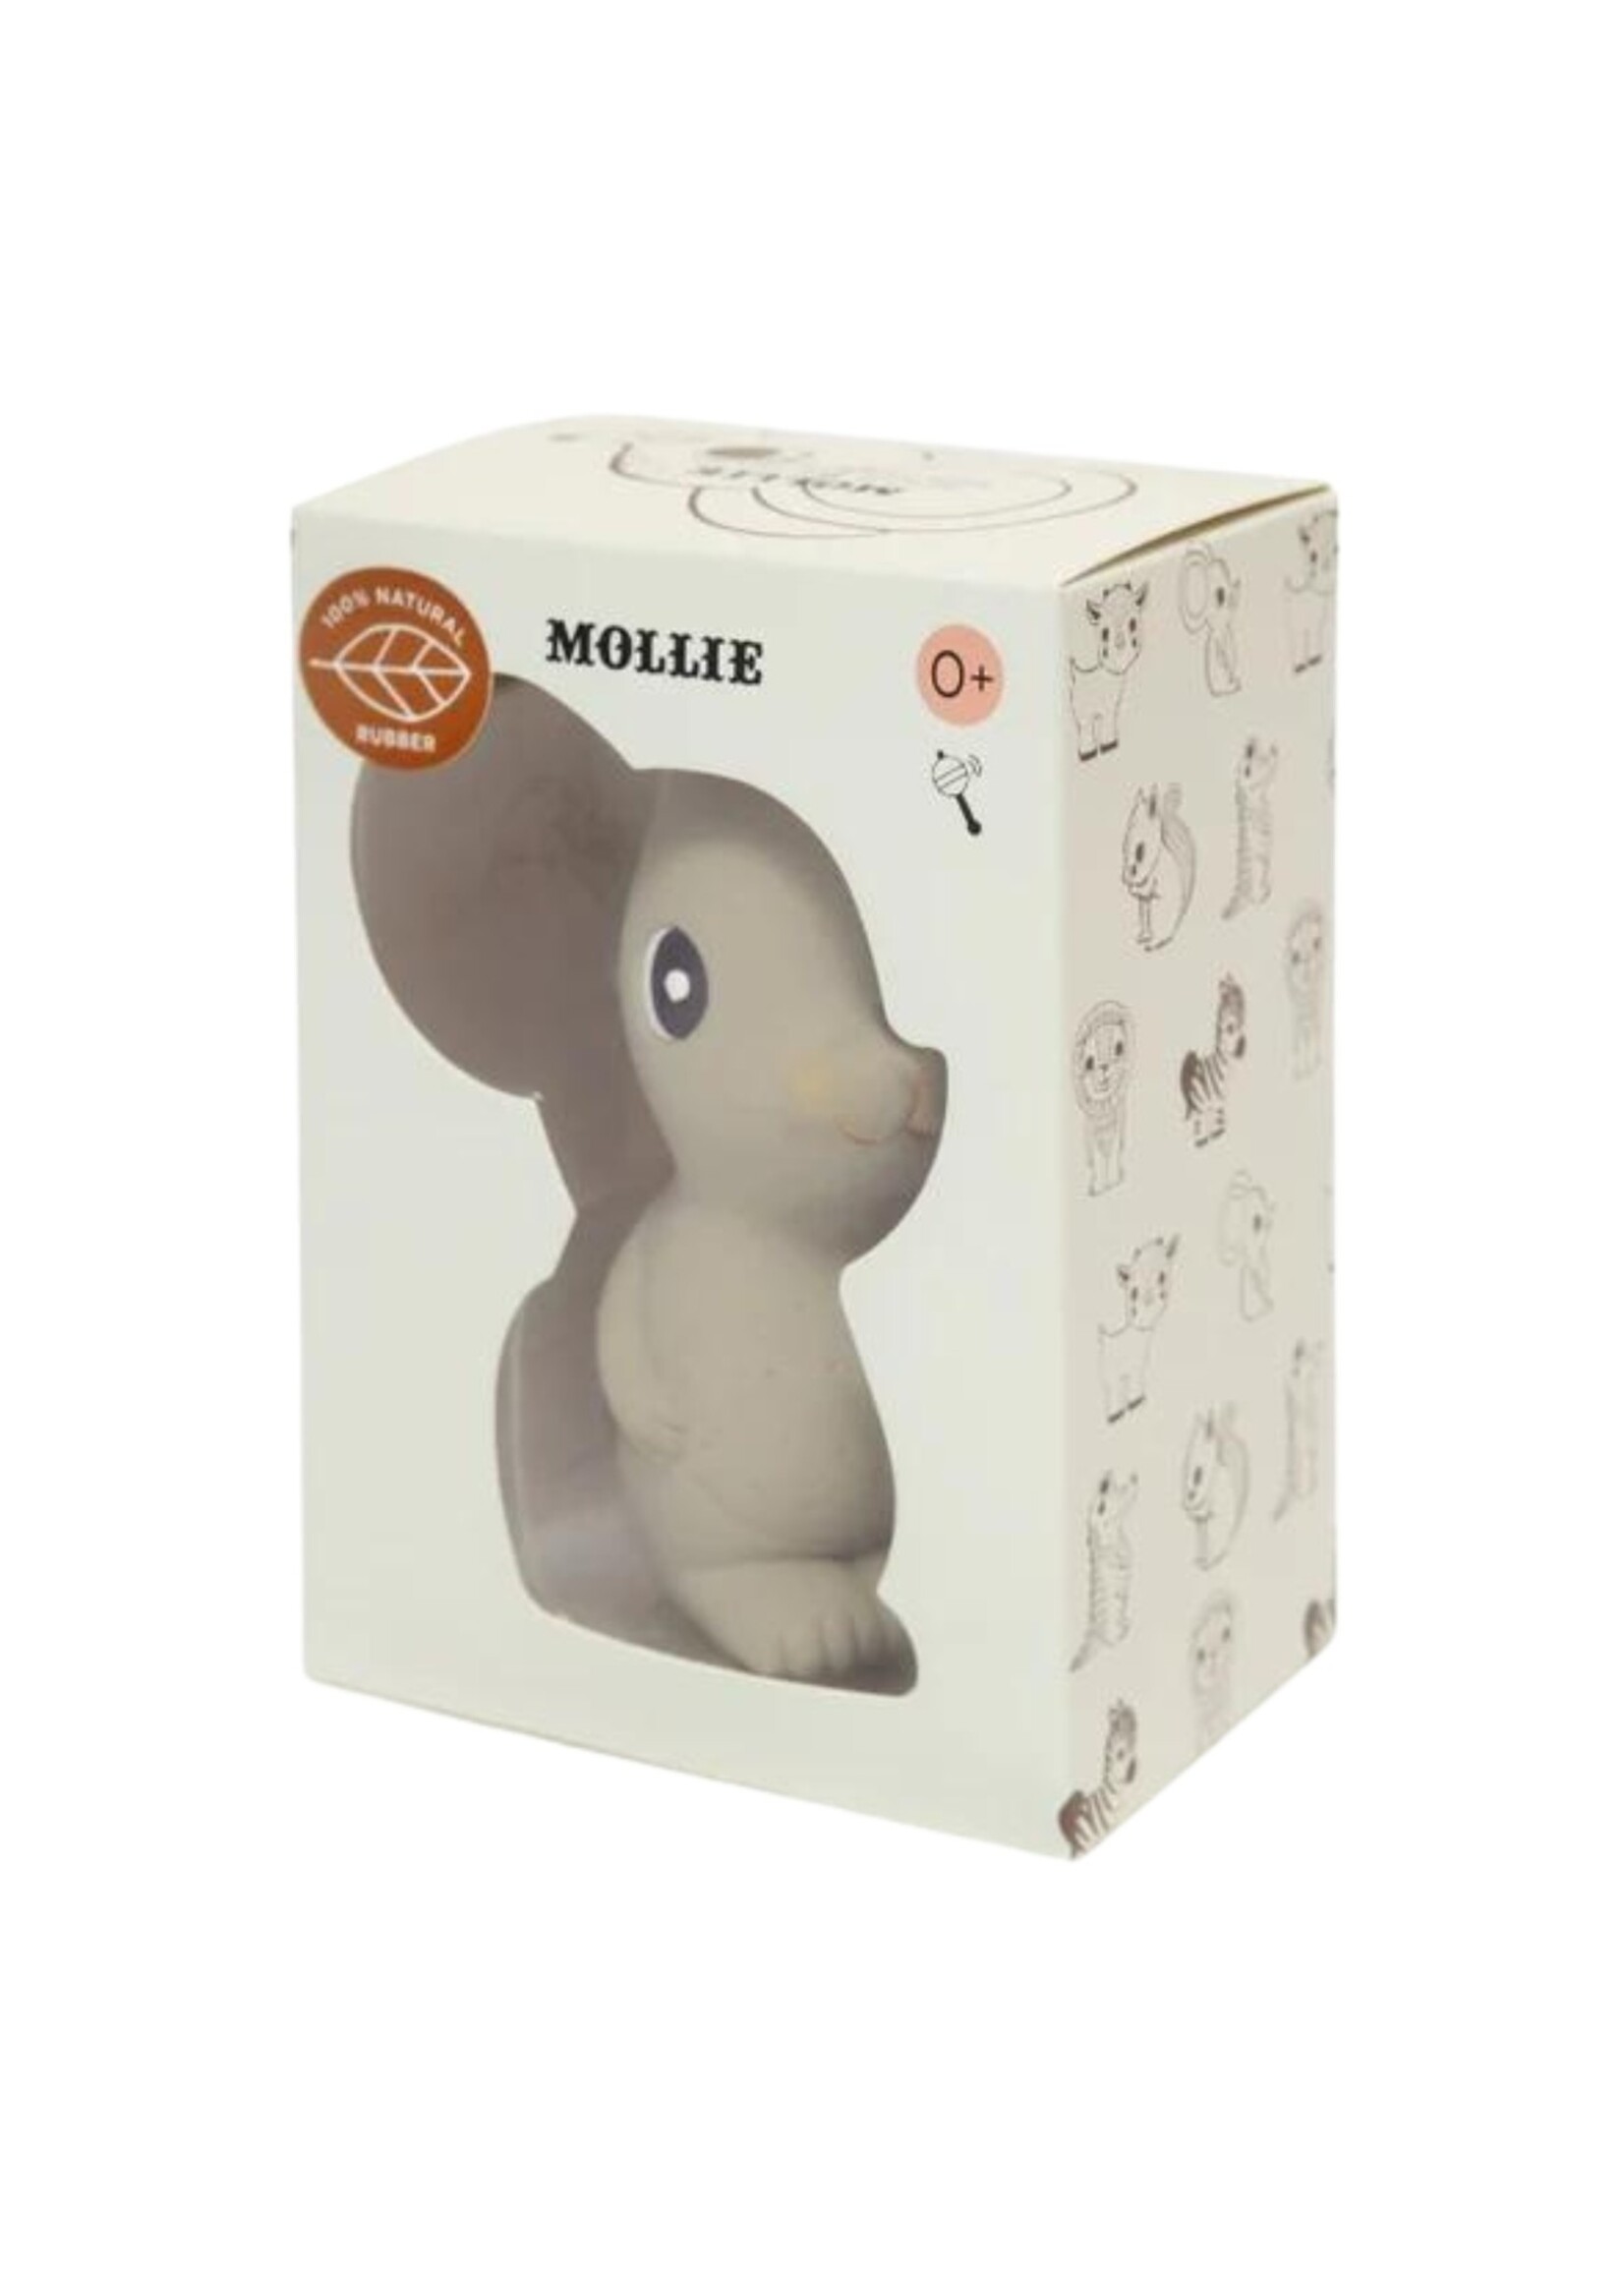 Petit Monkey Bad- en bijtspeeltje Mollie 100% natural rubber toy